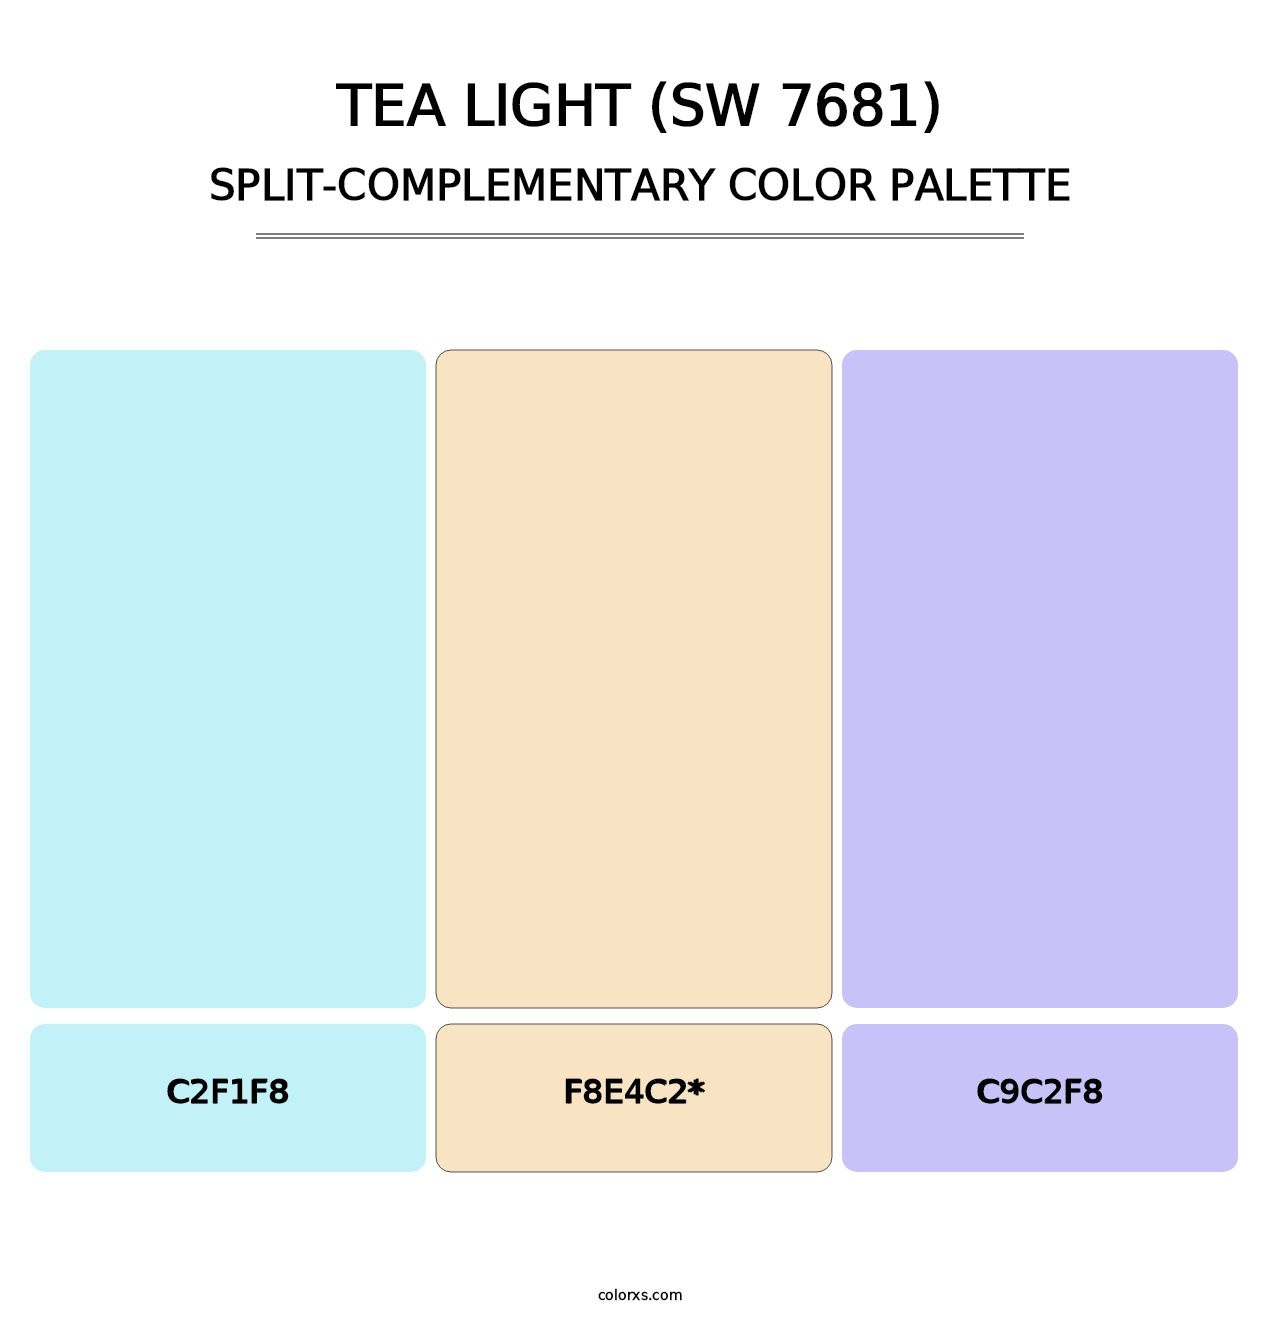 Tea Light (SW 7681) - Split-Complementary Color Palette